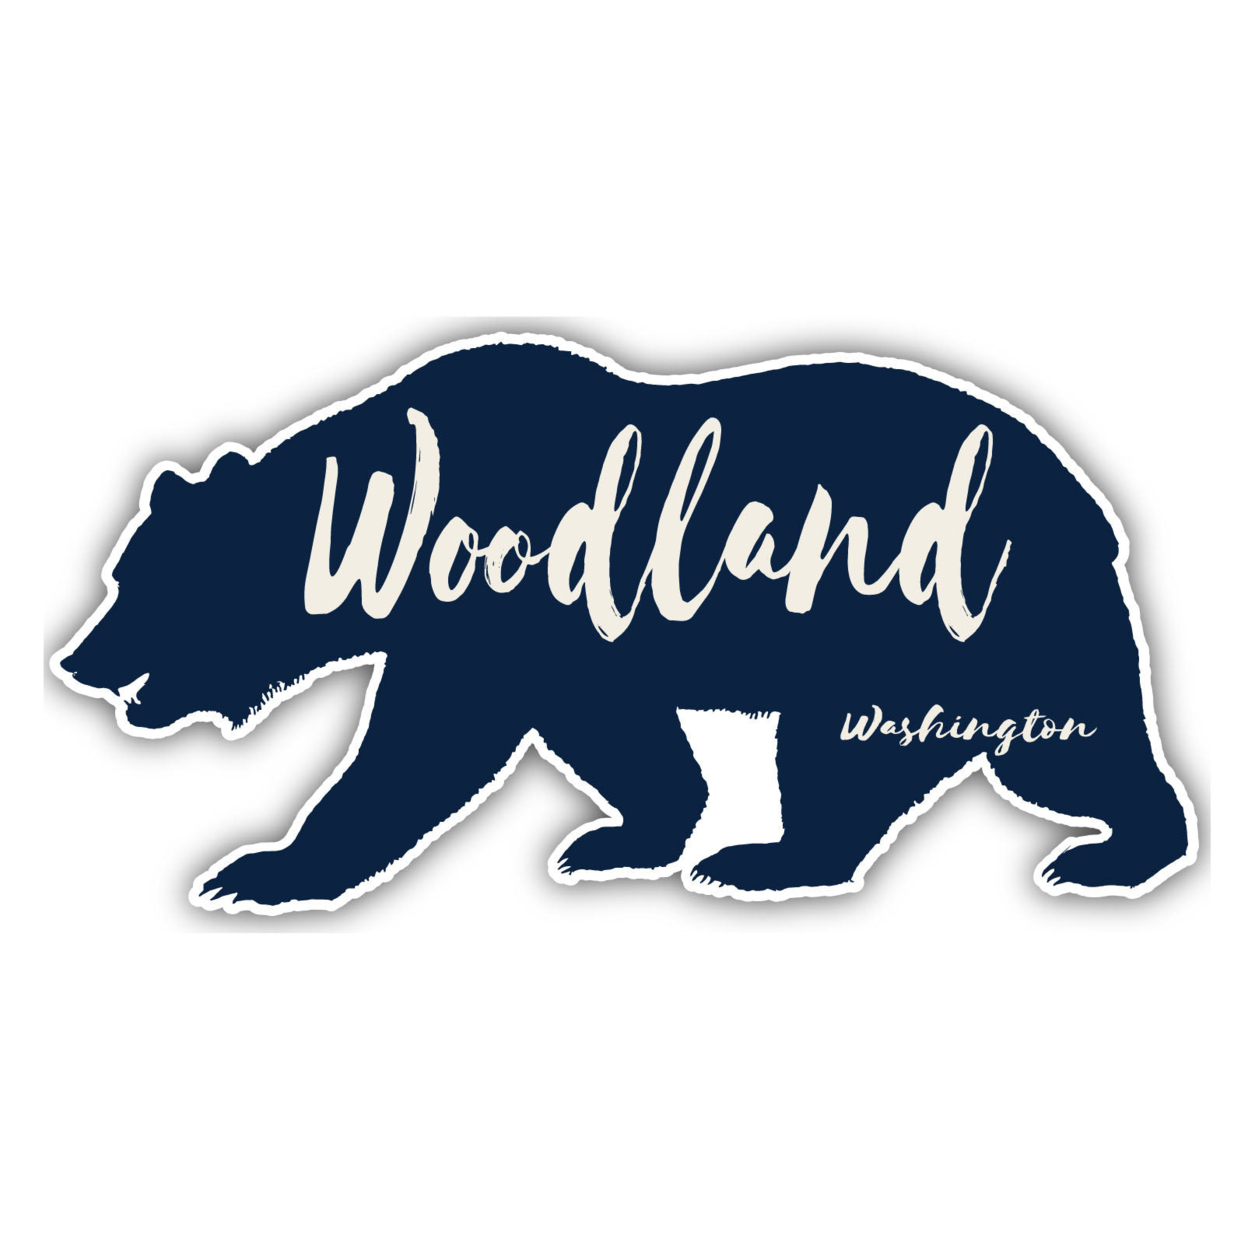 Woodland Washington Souvenir Decorative Stickers (Choose Theme And Size) - Single Unit, 2-Inch, Bear